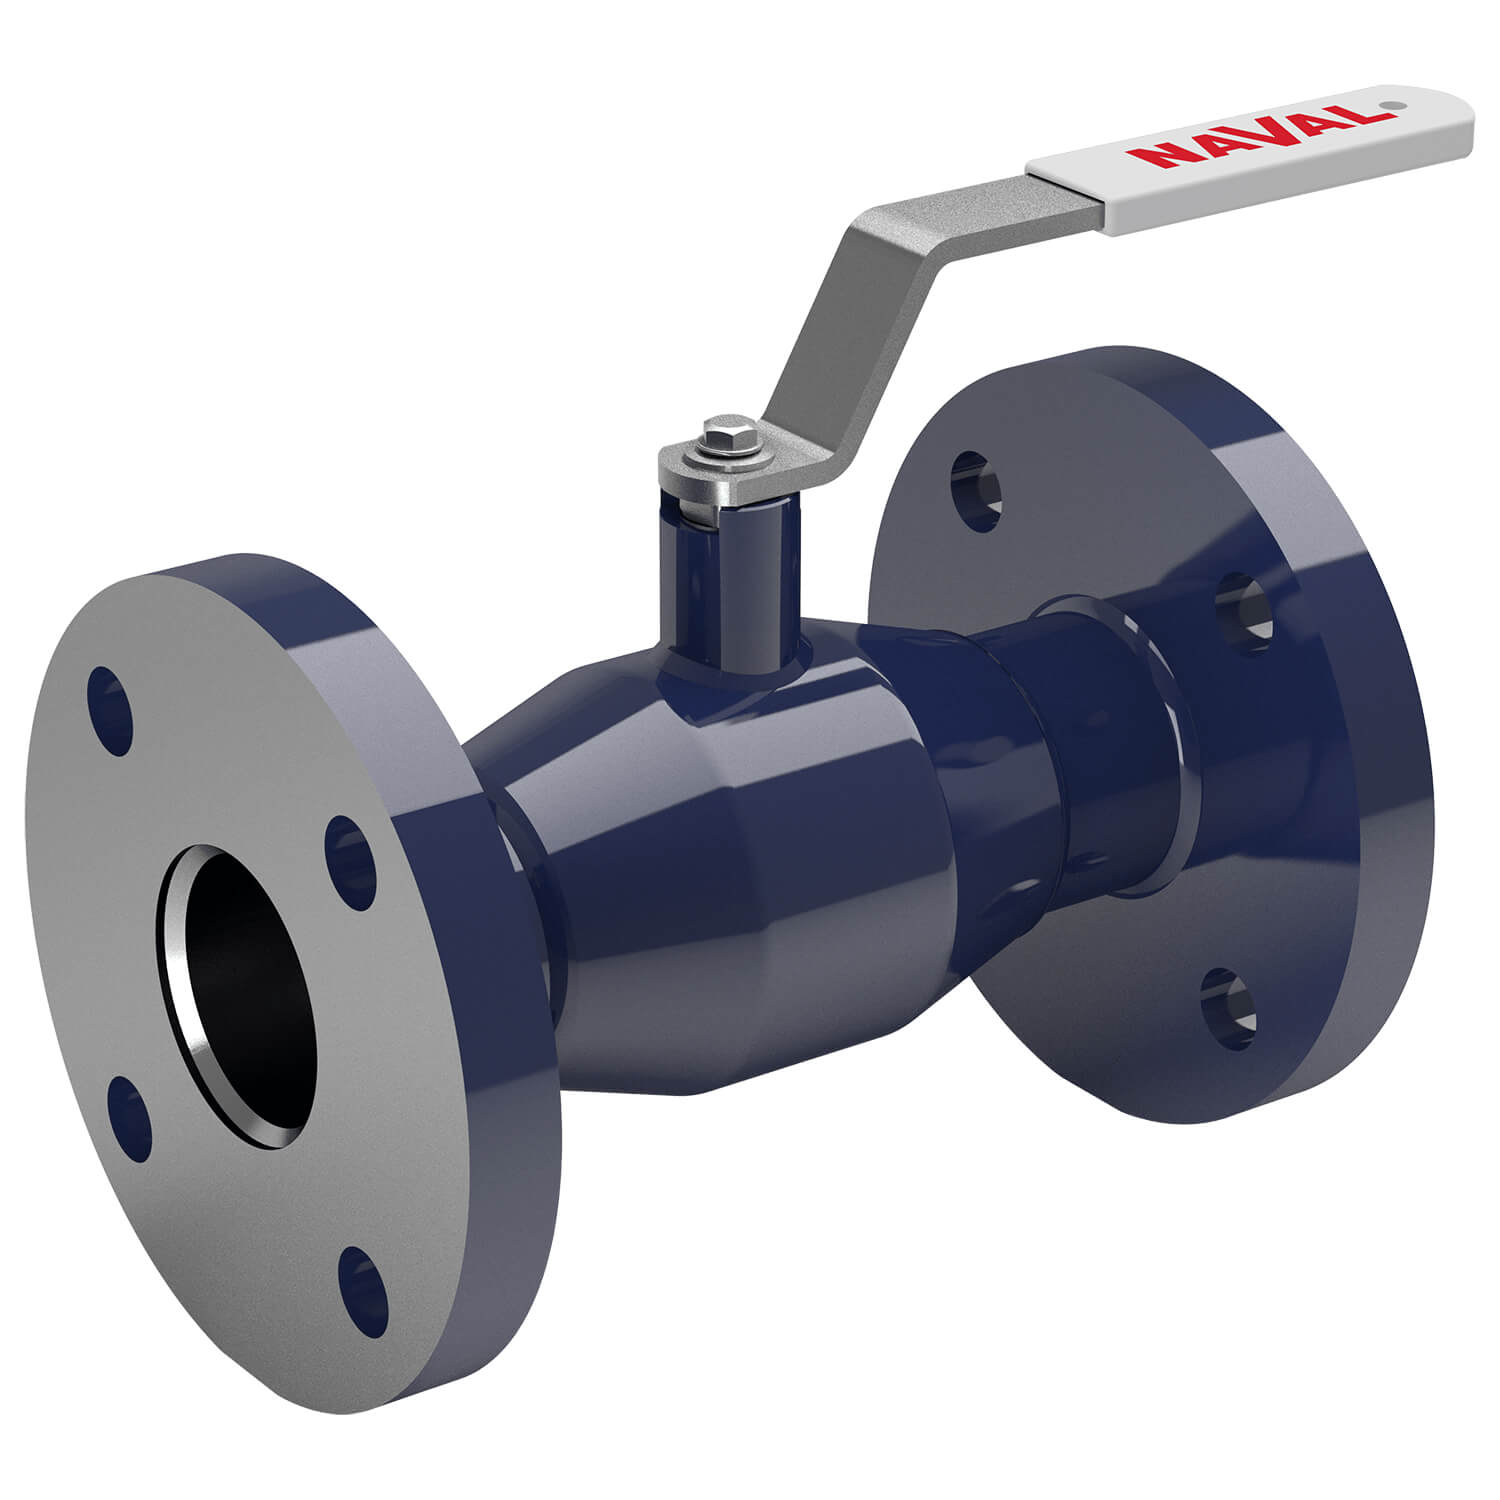 Ball valve, FL/FL, DN100 PN16 rb, handle